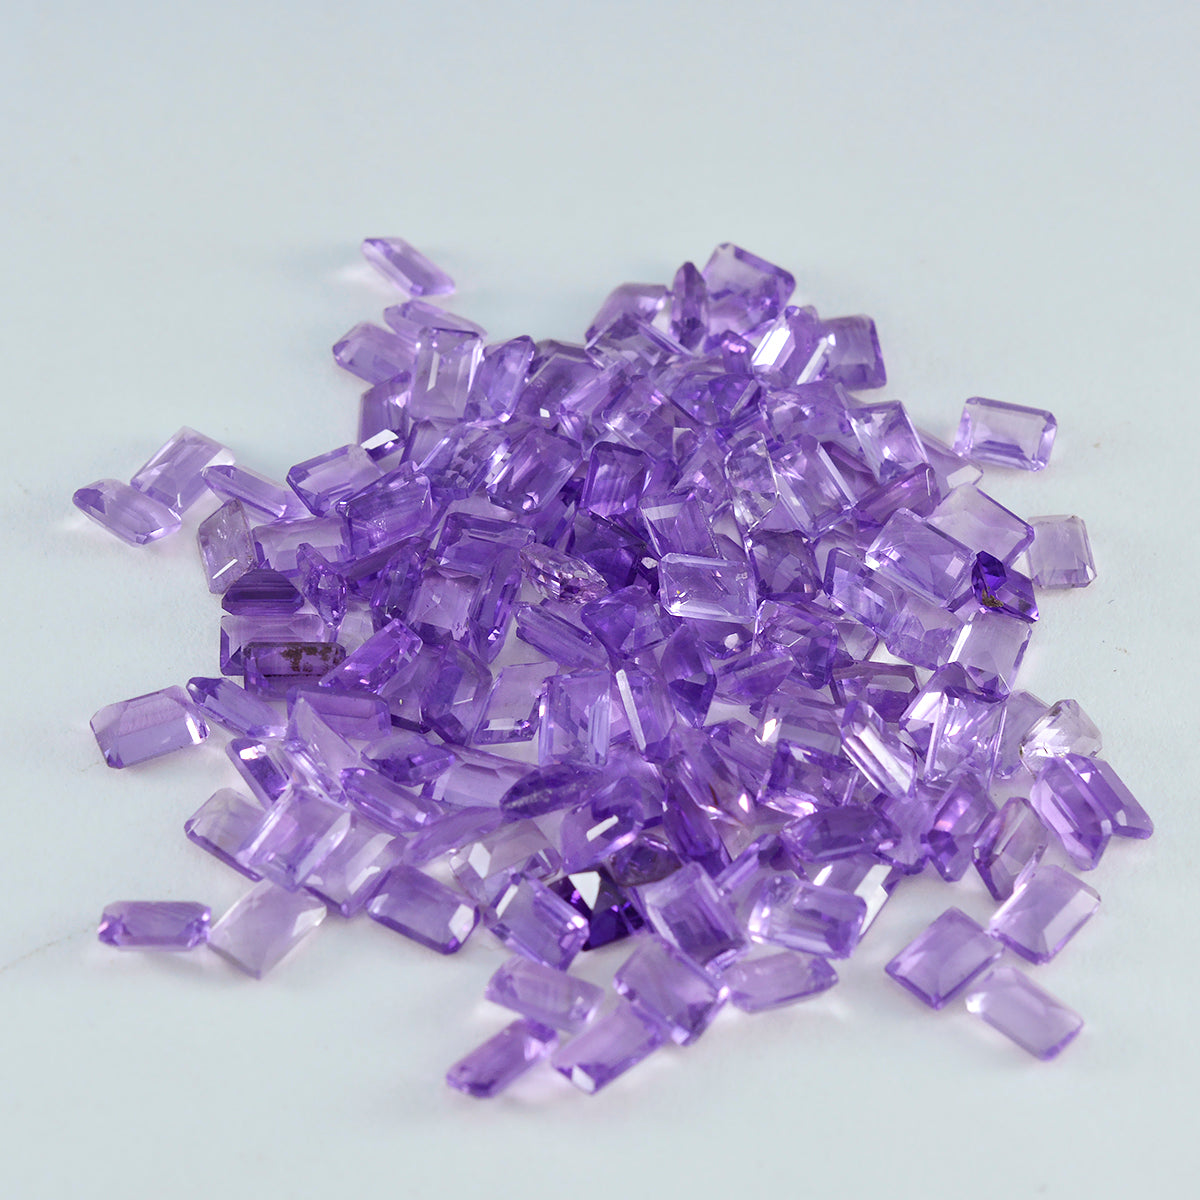 Riyogems 1PC Genuine Purple Amethyst Faceted 3X5 mm Octagon Shape cute Quality Loose Stone